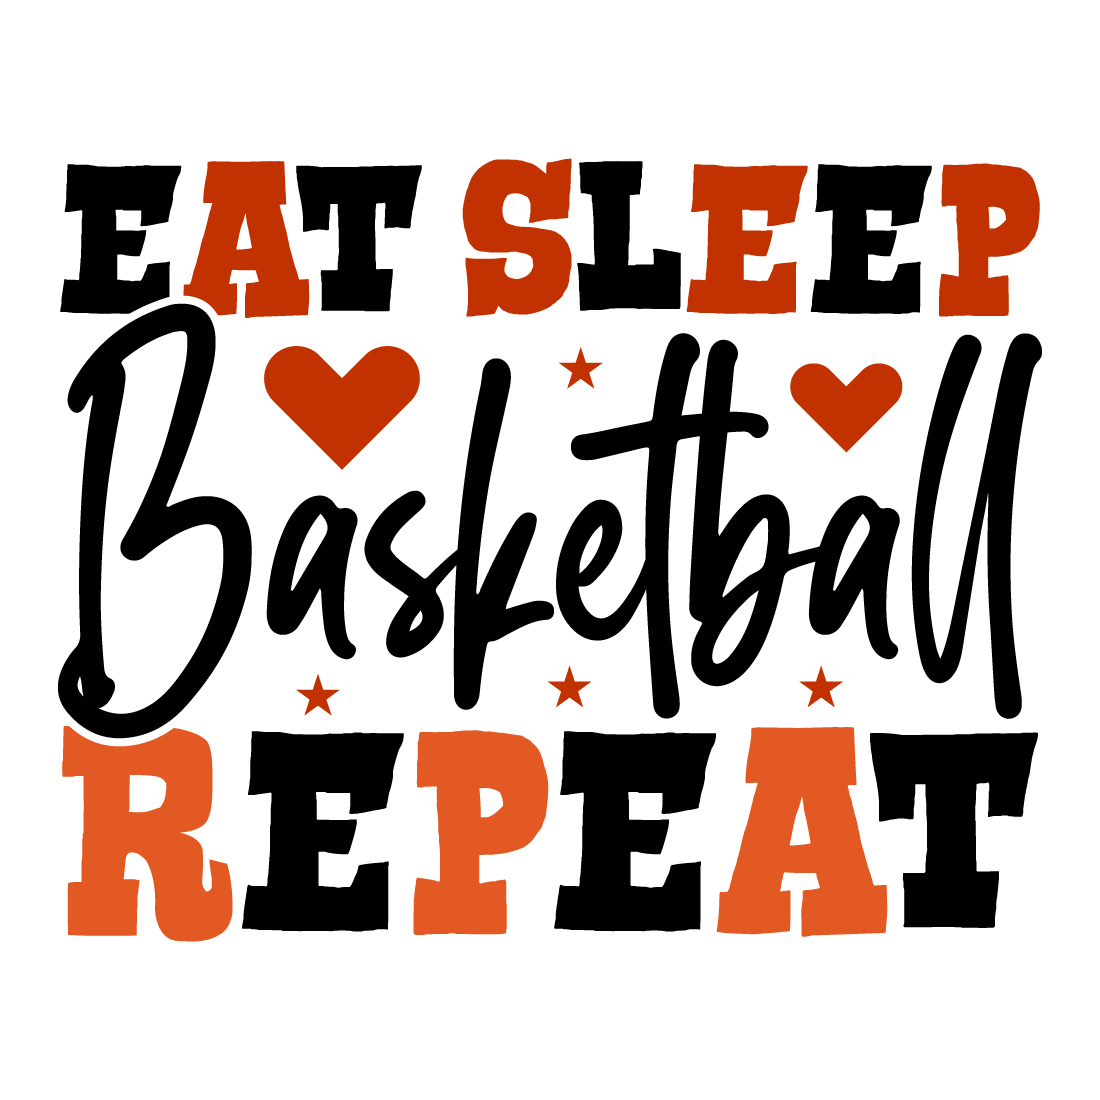 Eat Sleep Basketball Repeat preview image.